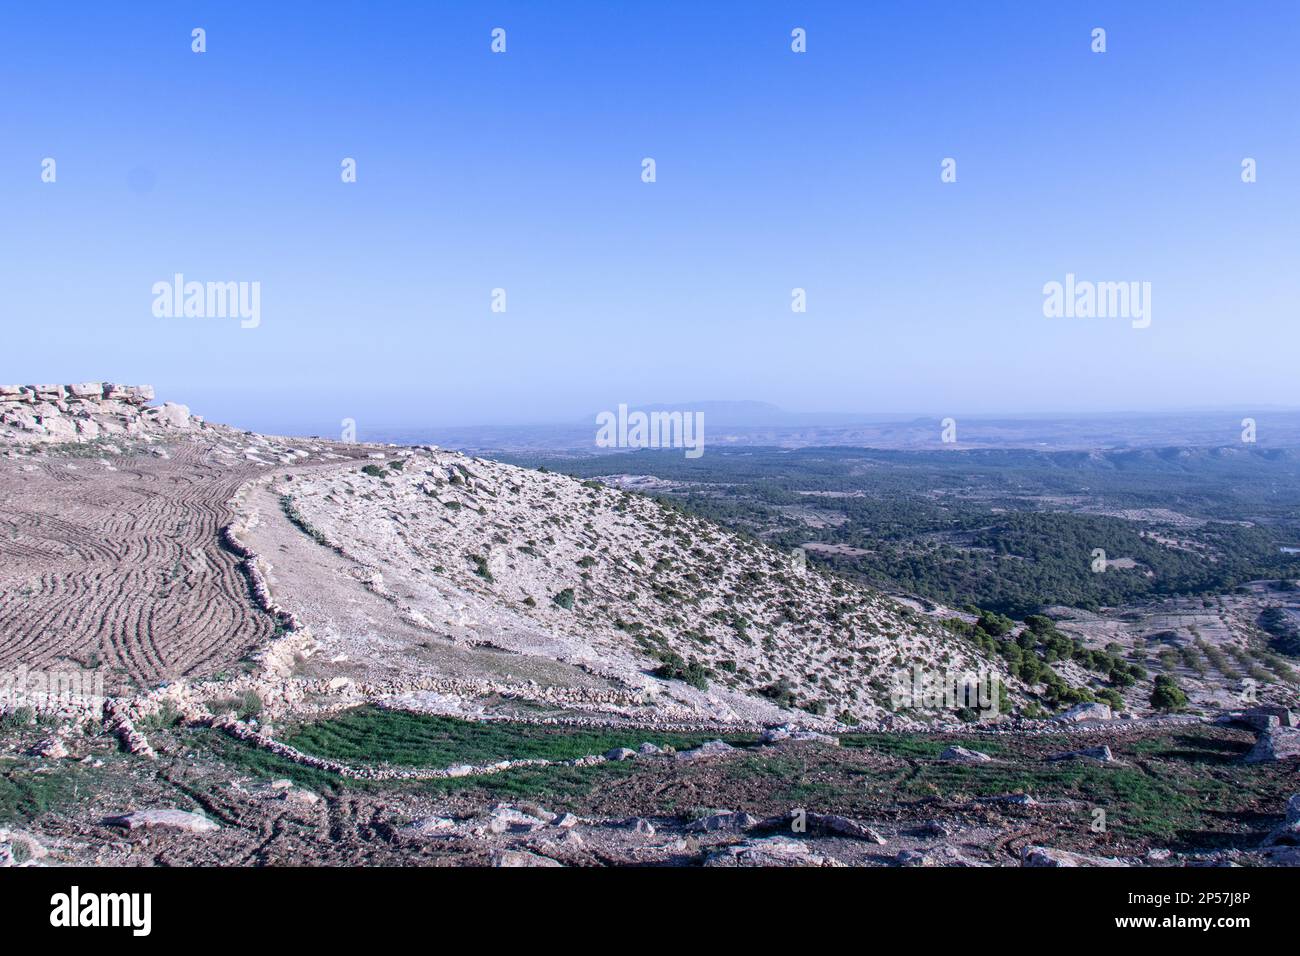 Landscape of Kesra, Siliana, Tunisia North Africa Stock Photo